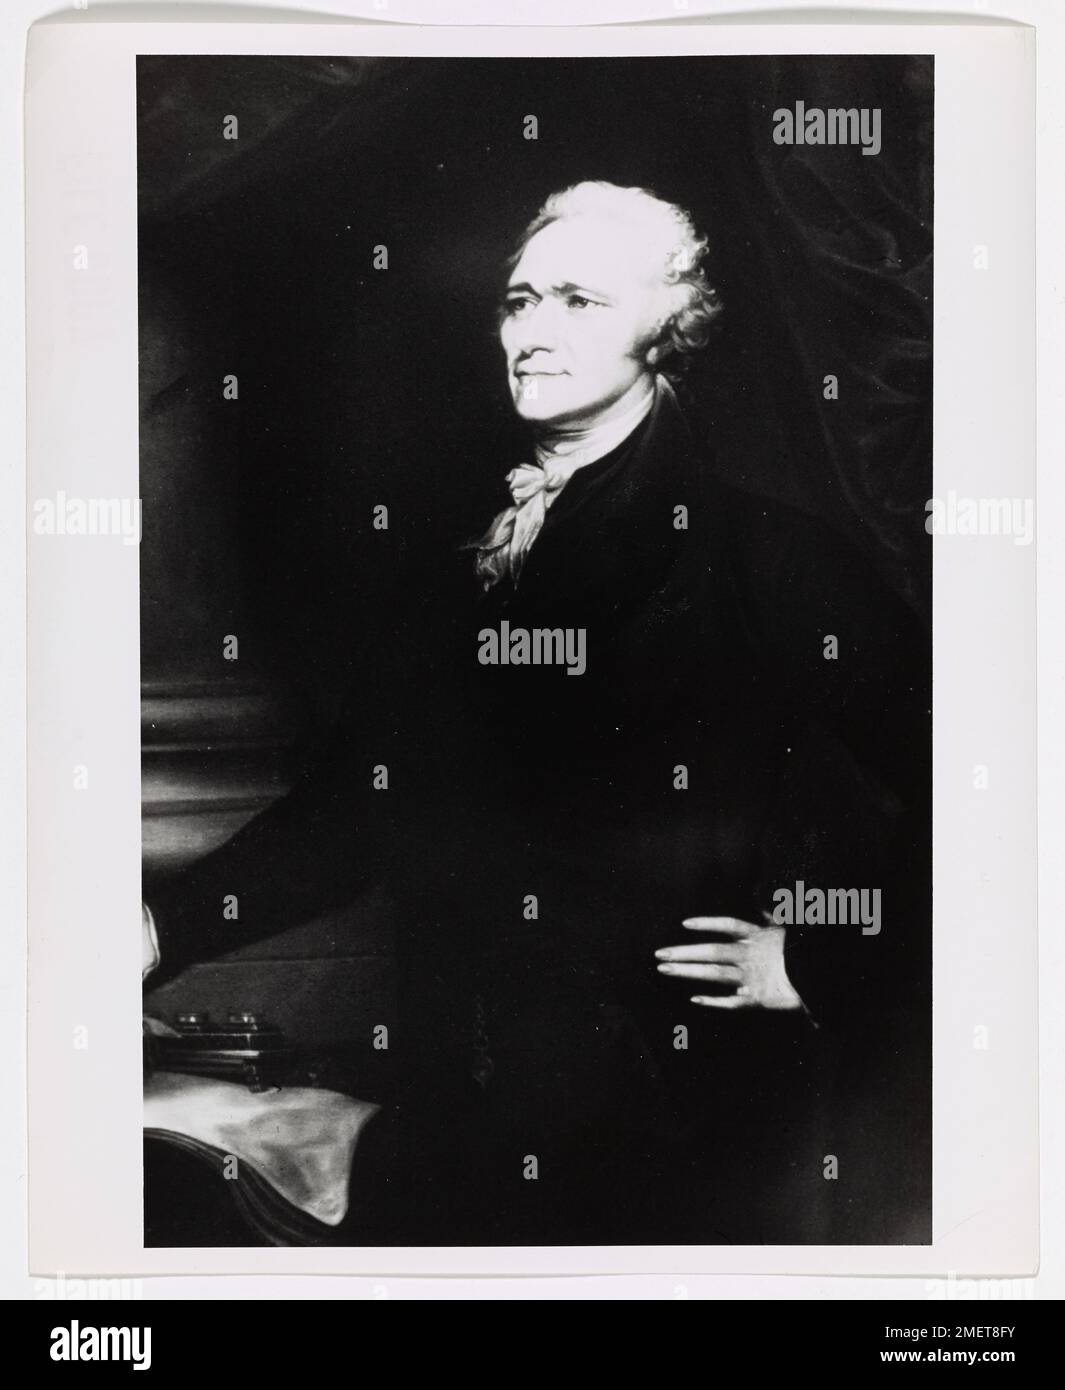 Photograph of a Portrait of Alexander Hamilton Artwork. Stock Photo